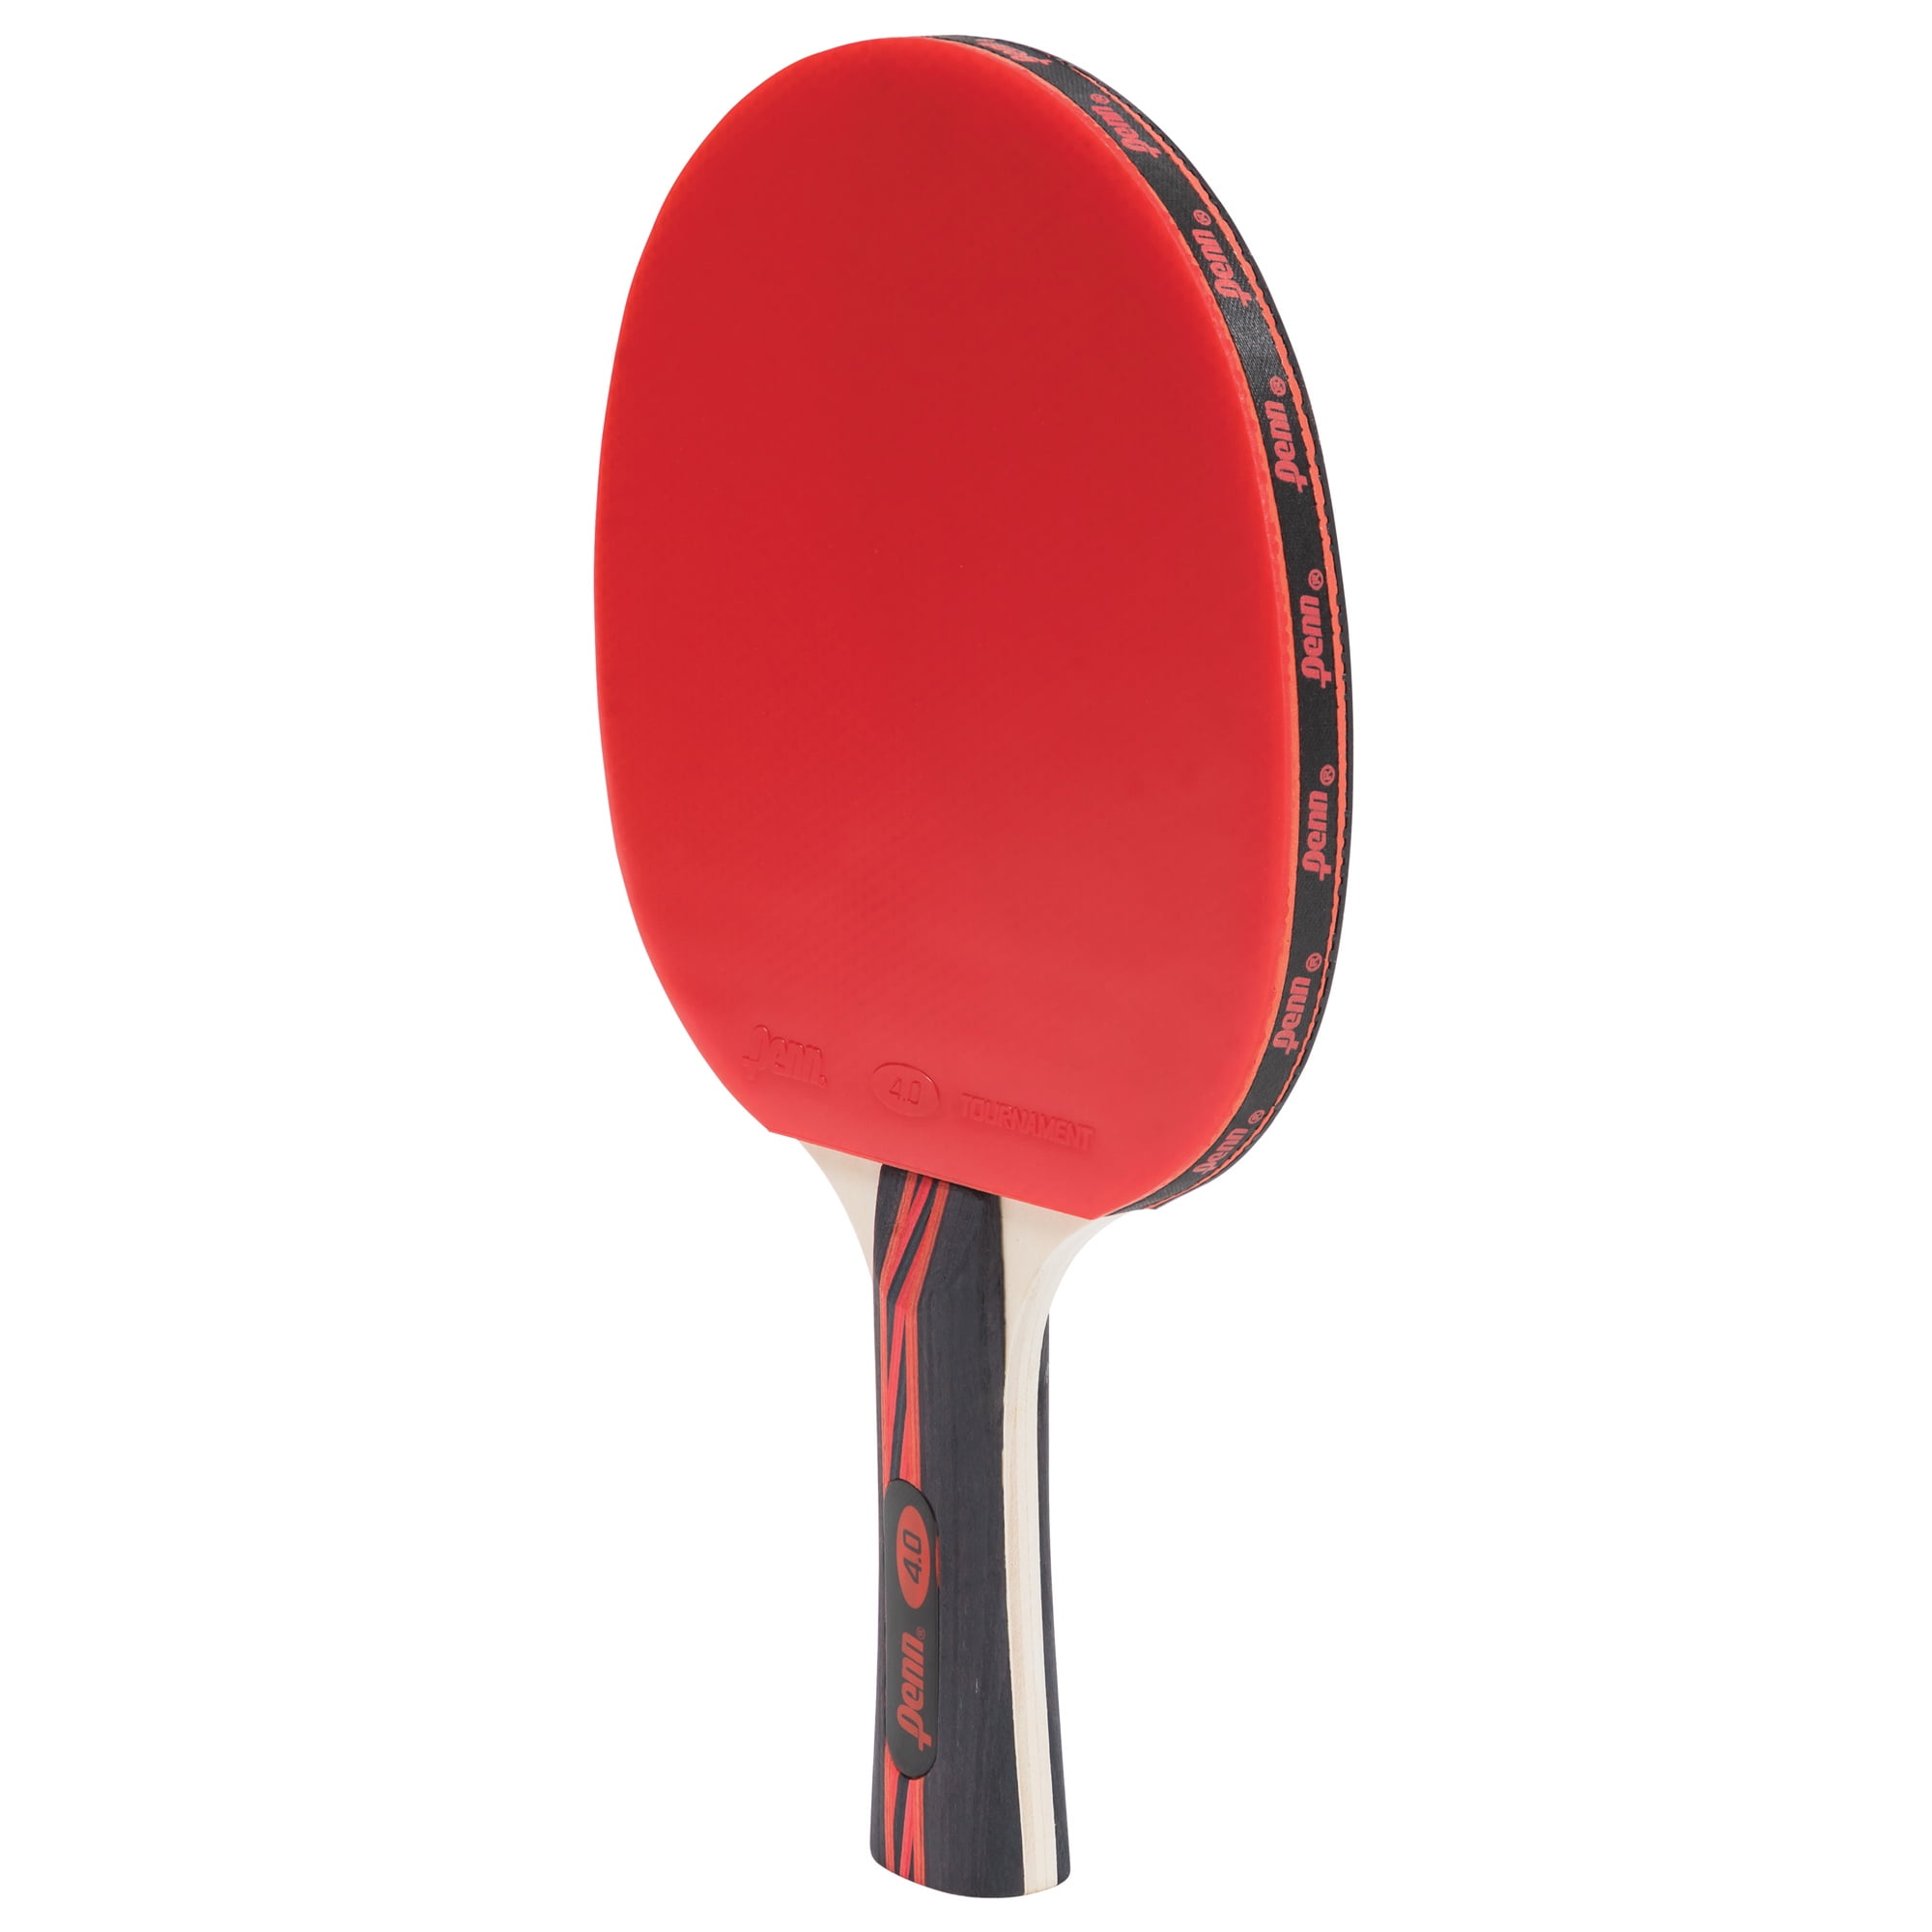 Stiga Pro Carbon Premium Ping Pong Table Tennis Paddle Racket Titan Tournament